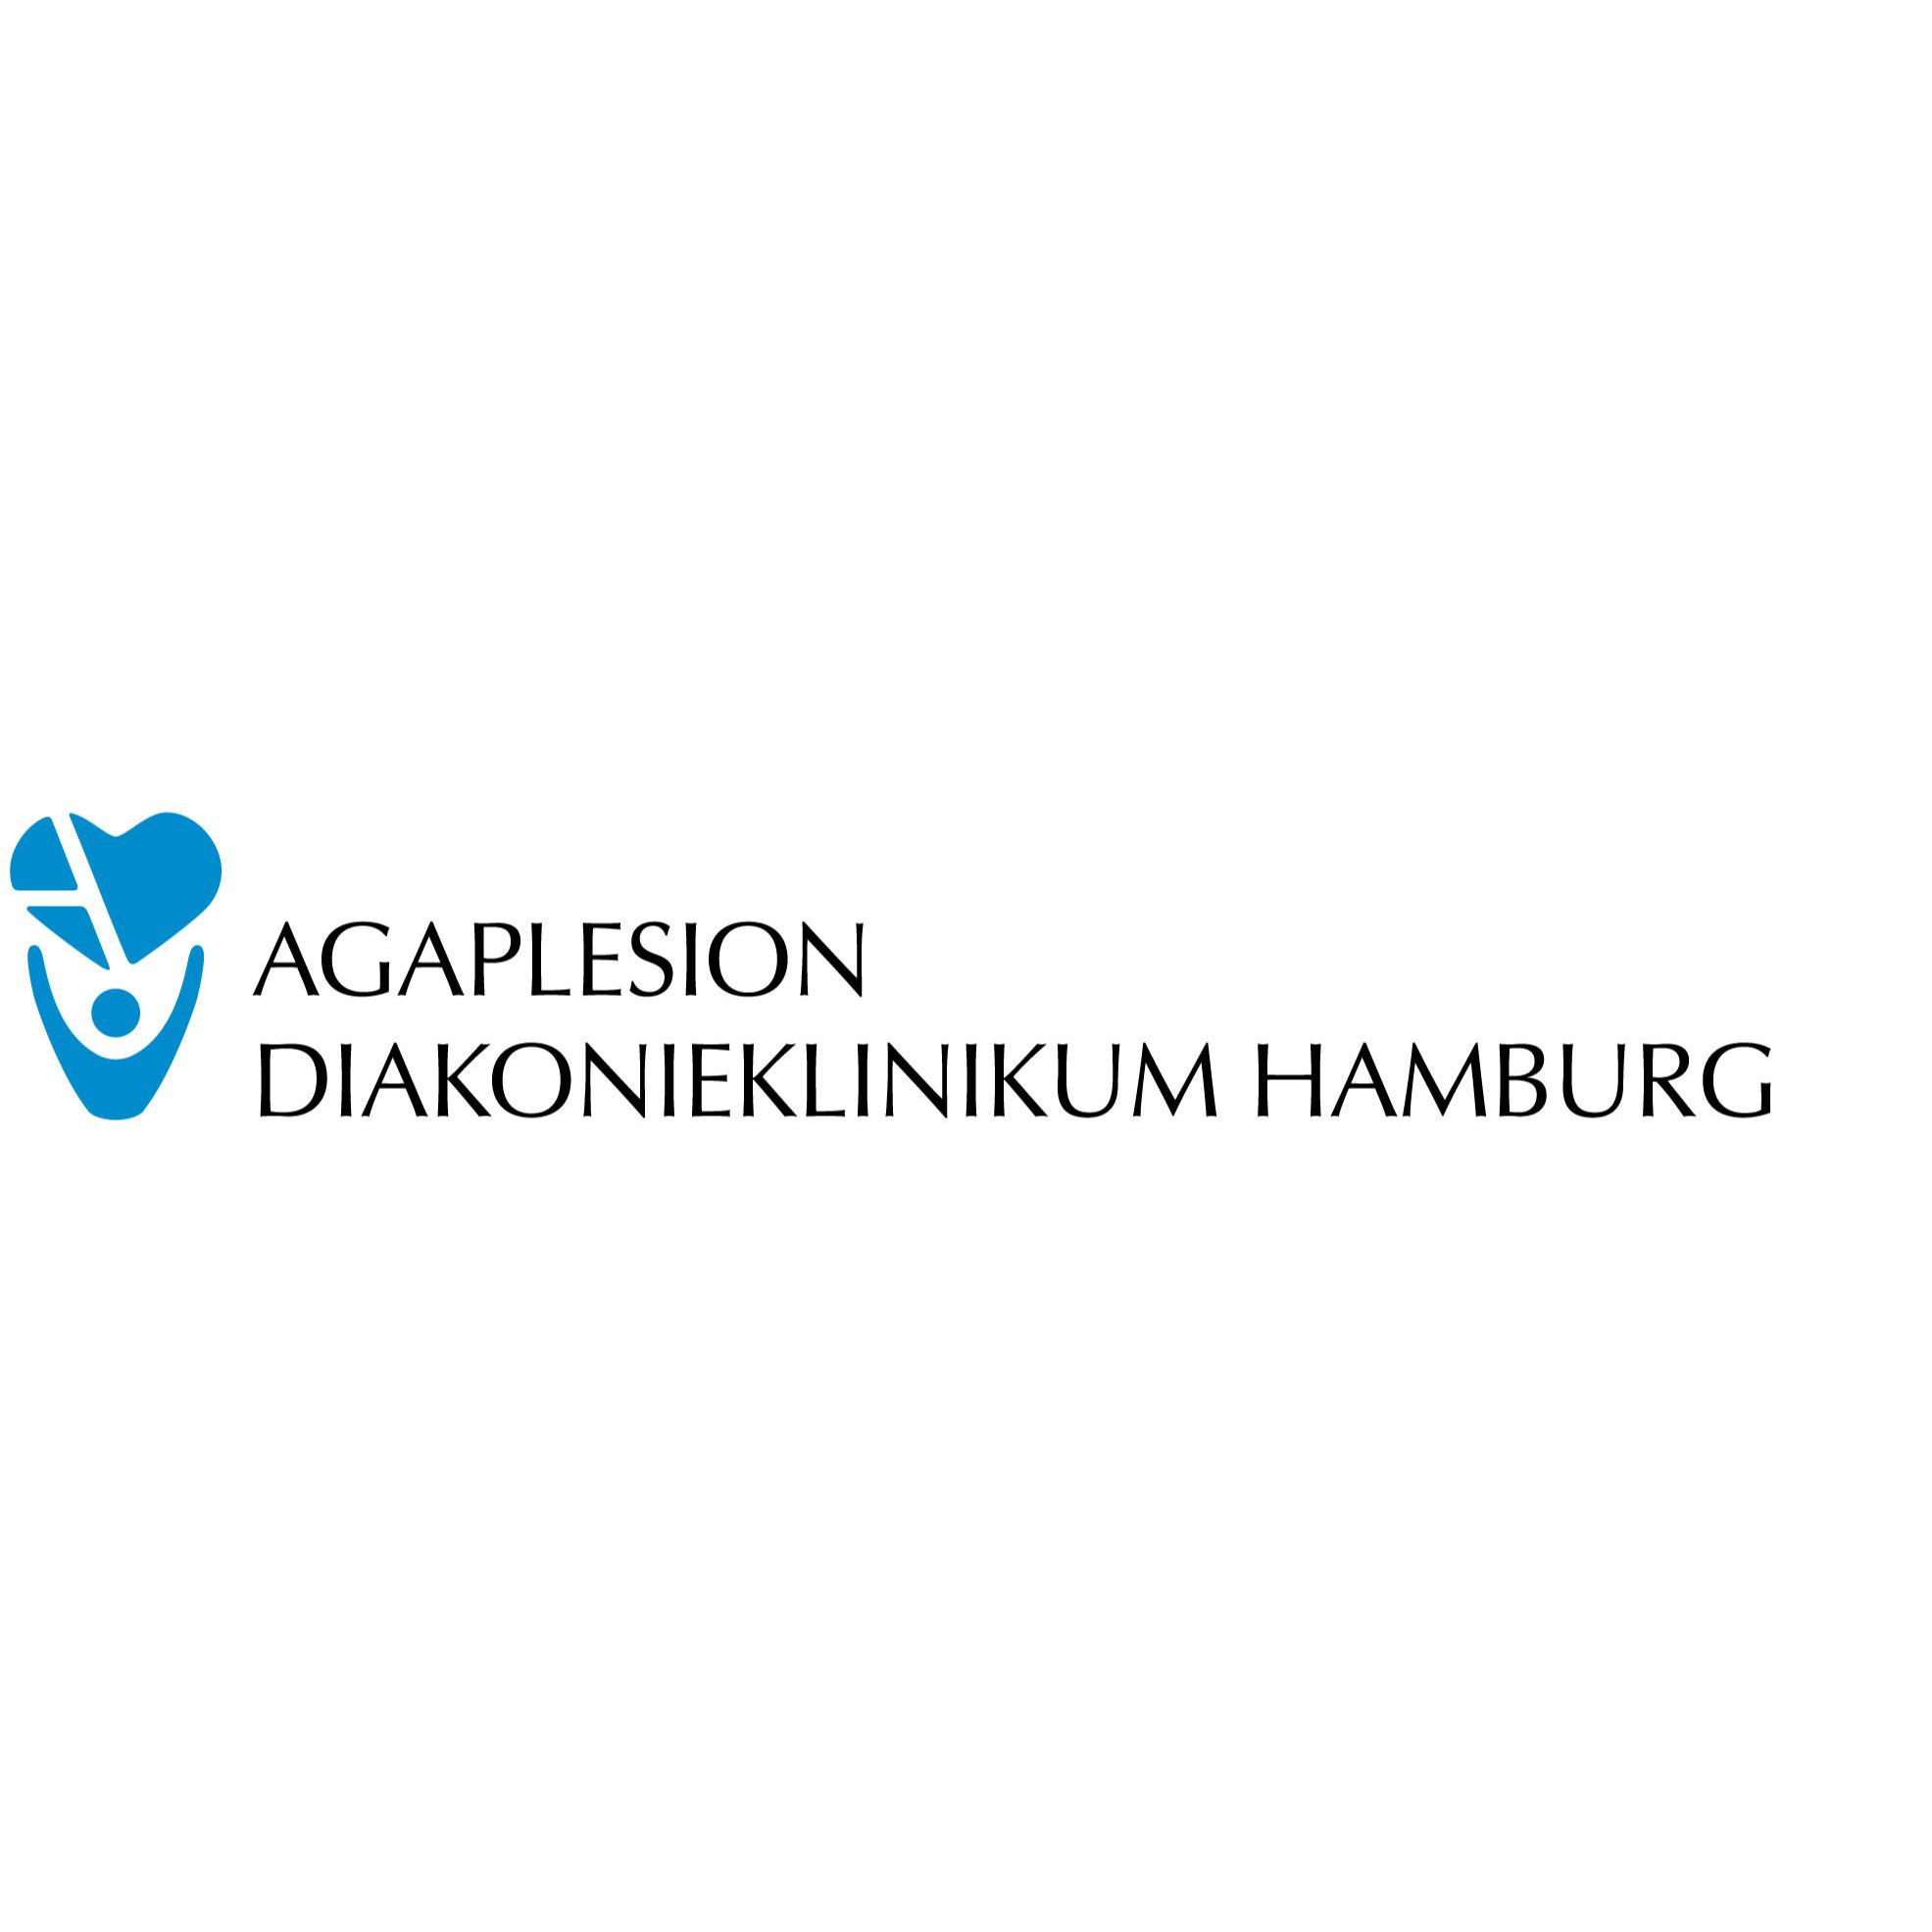 AGAPLESION DIAKONIEKLINIKUM HAMBURG in Hamburg - Logo